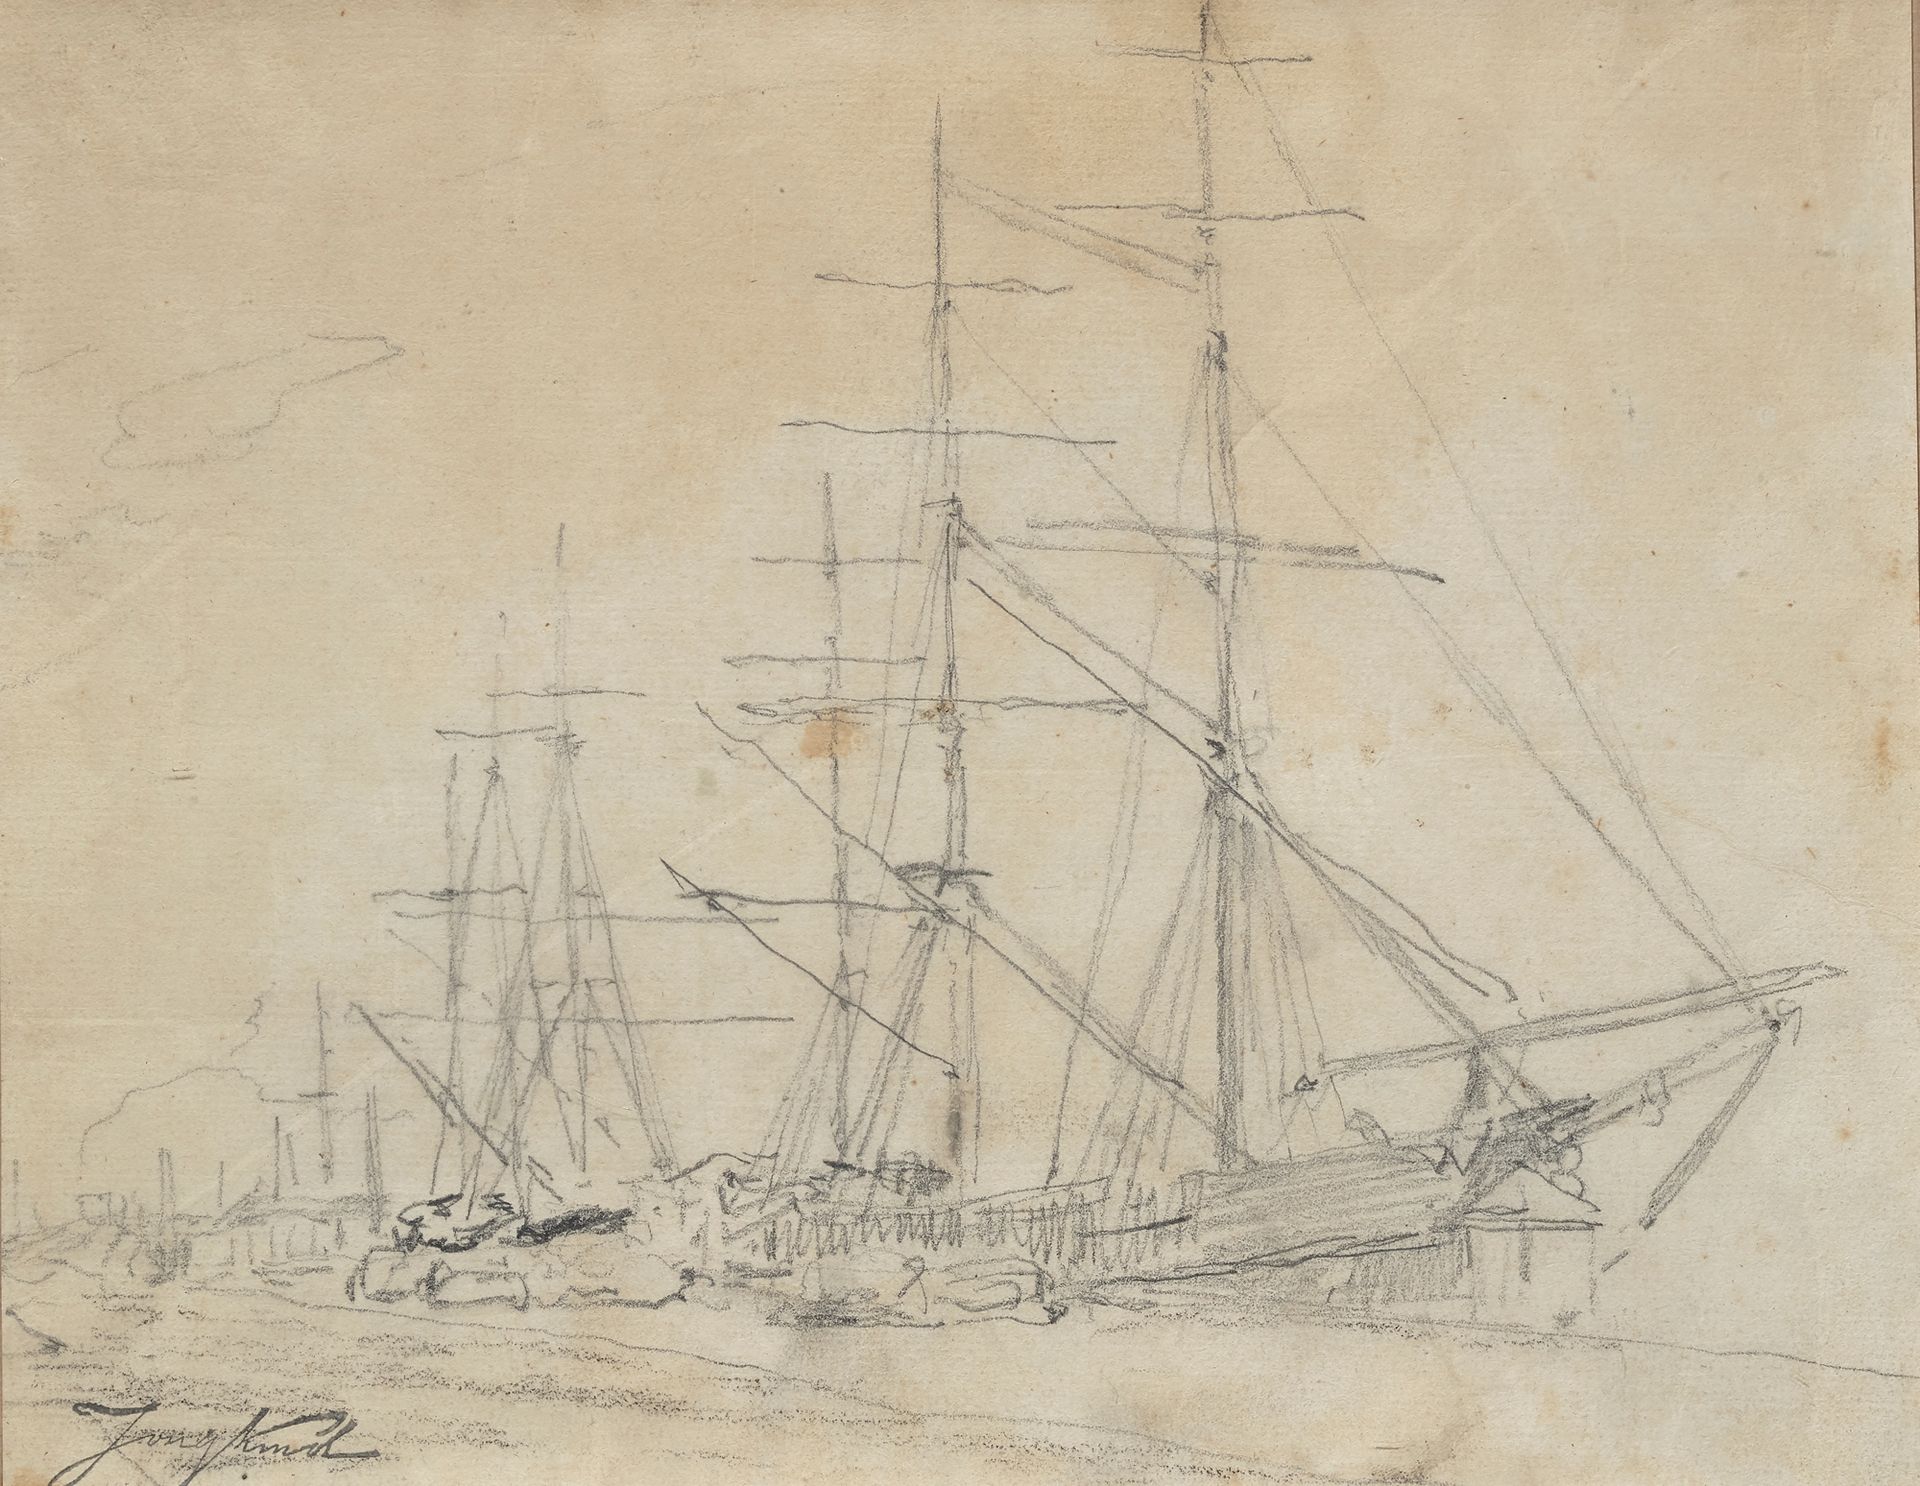 Johan-Barthold JONGKIND (1819-1891) 
帆船
铅笔
20 x 26 cm (正在观看)